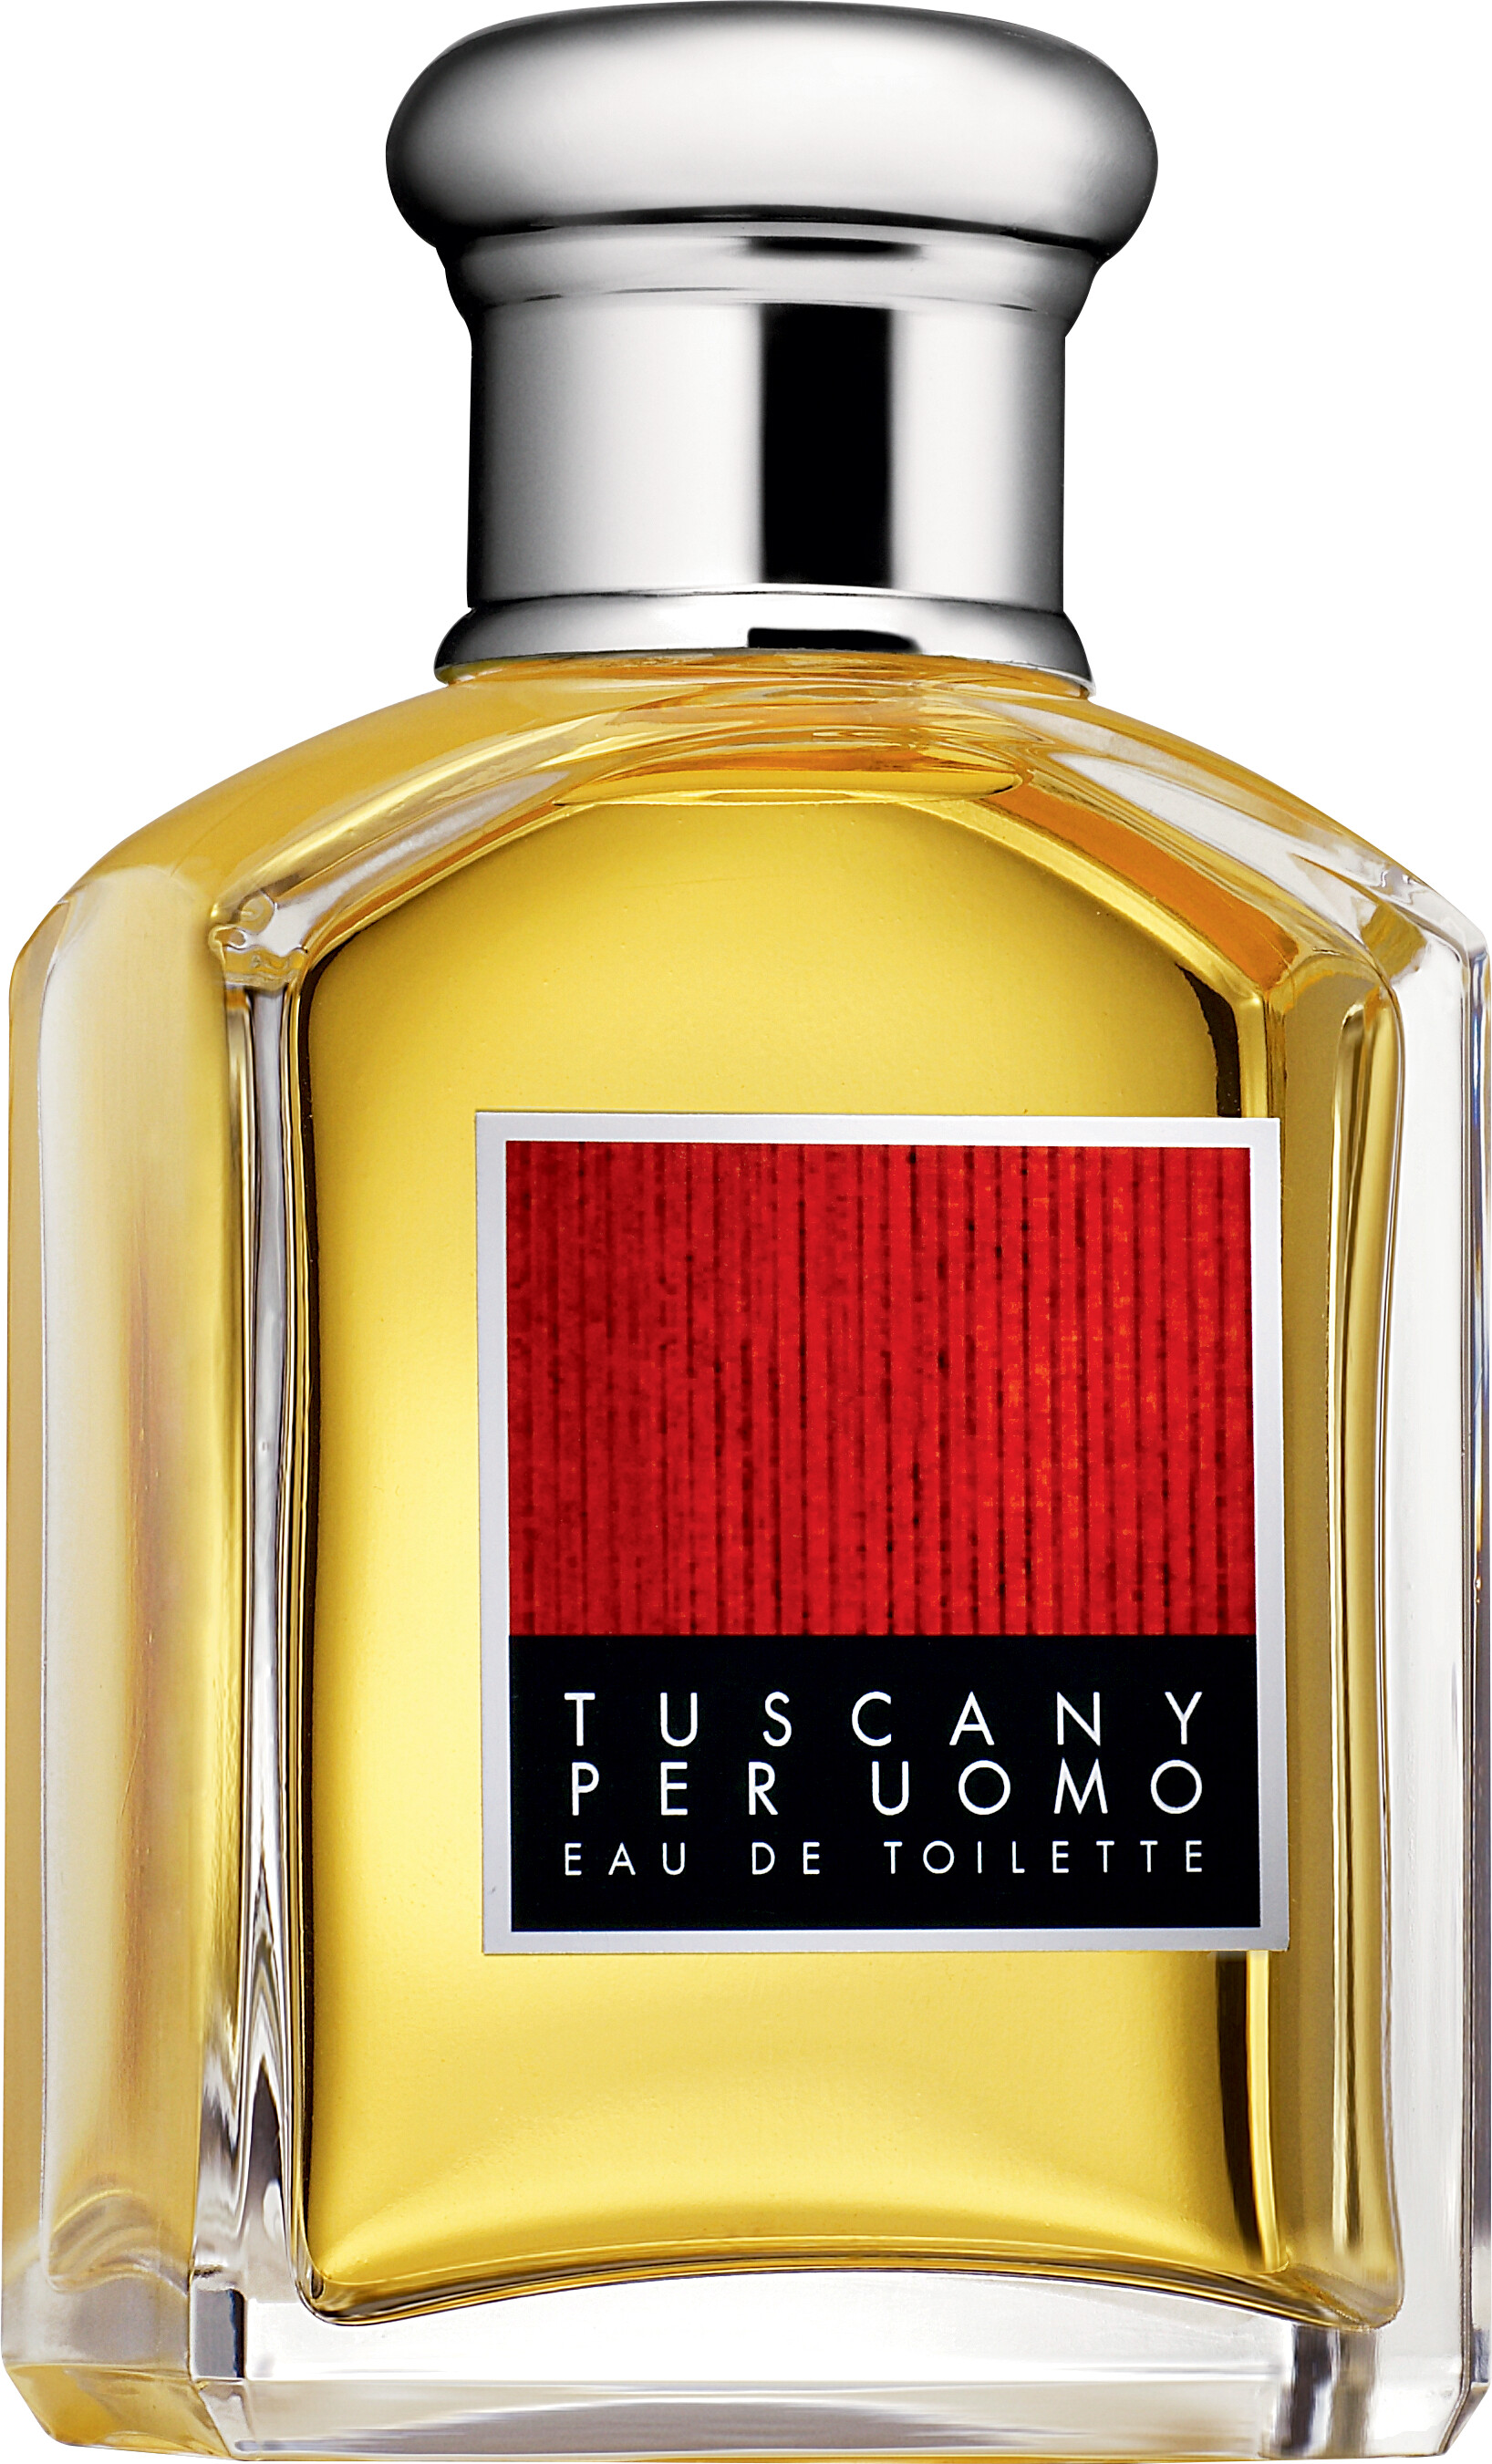 Aramis Gentleman's Collection Tuscany Per Uomo Eau de Toilette Spray 100ml